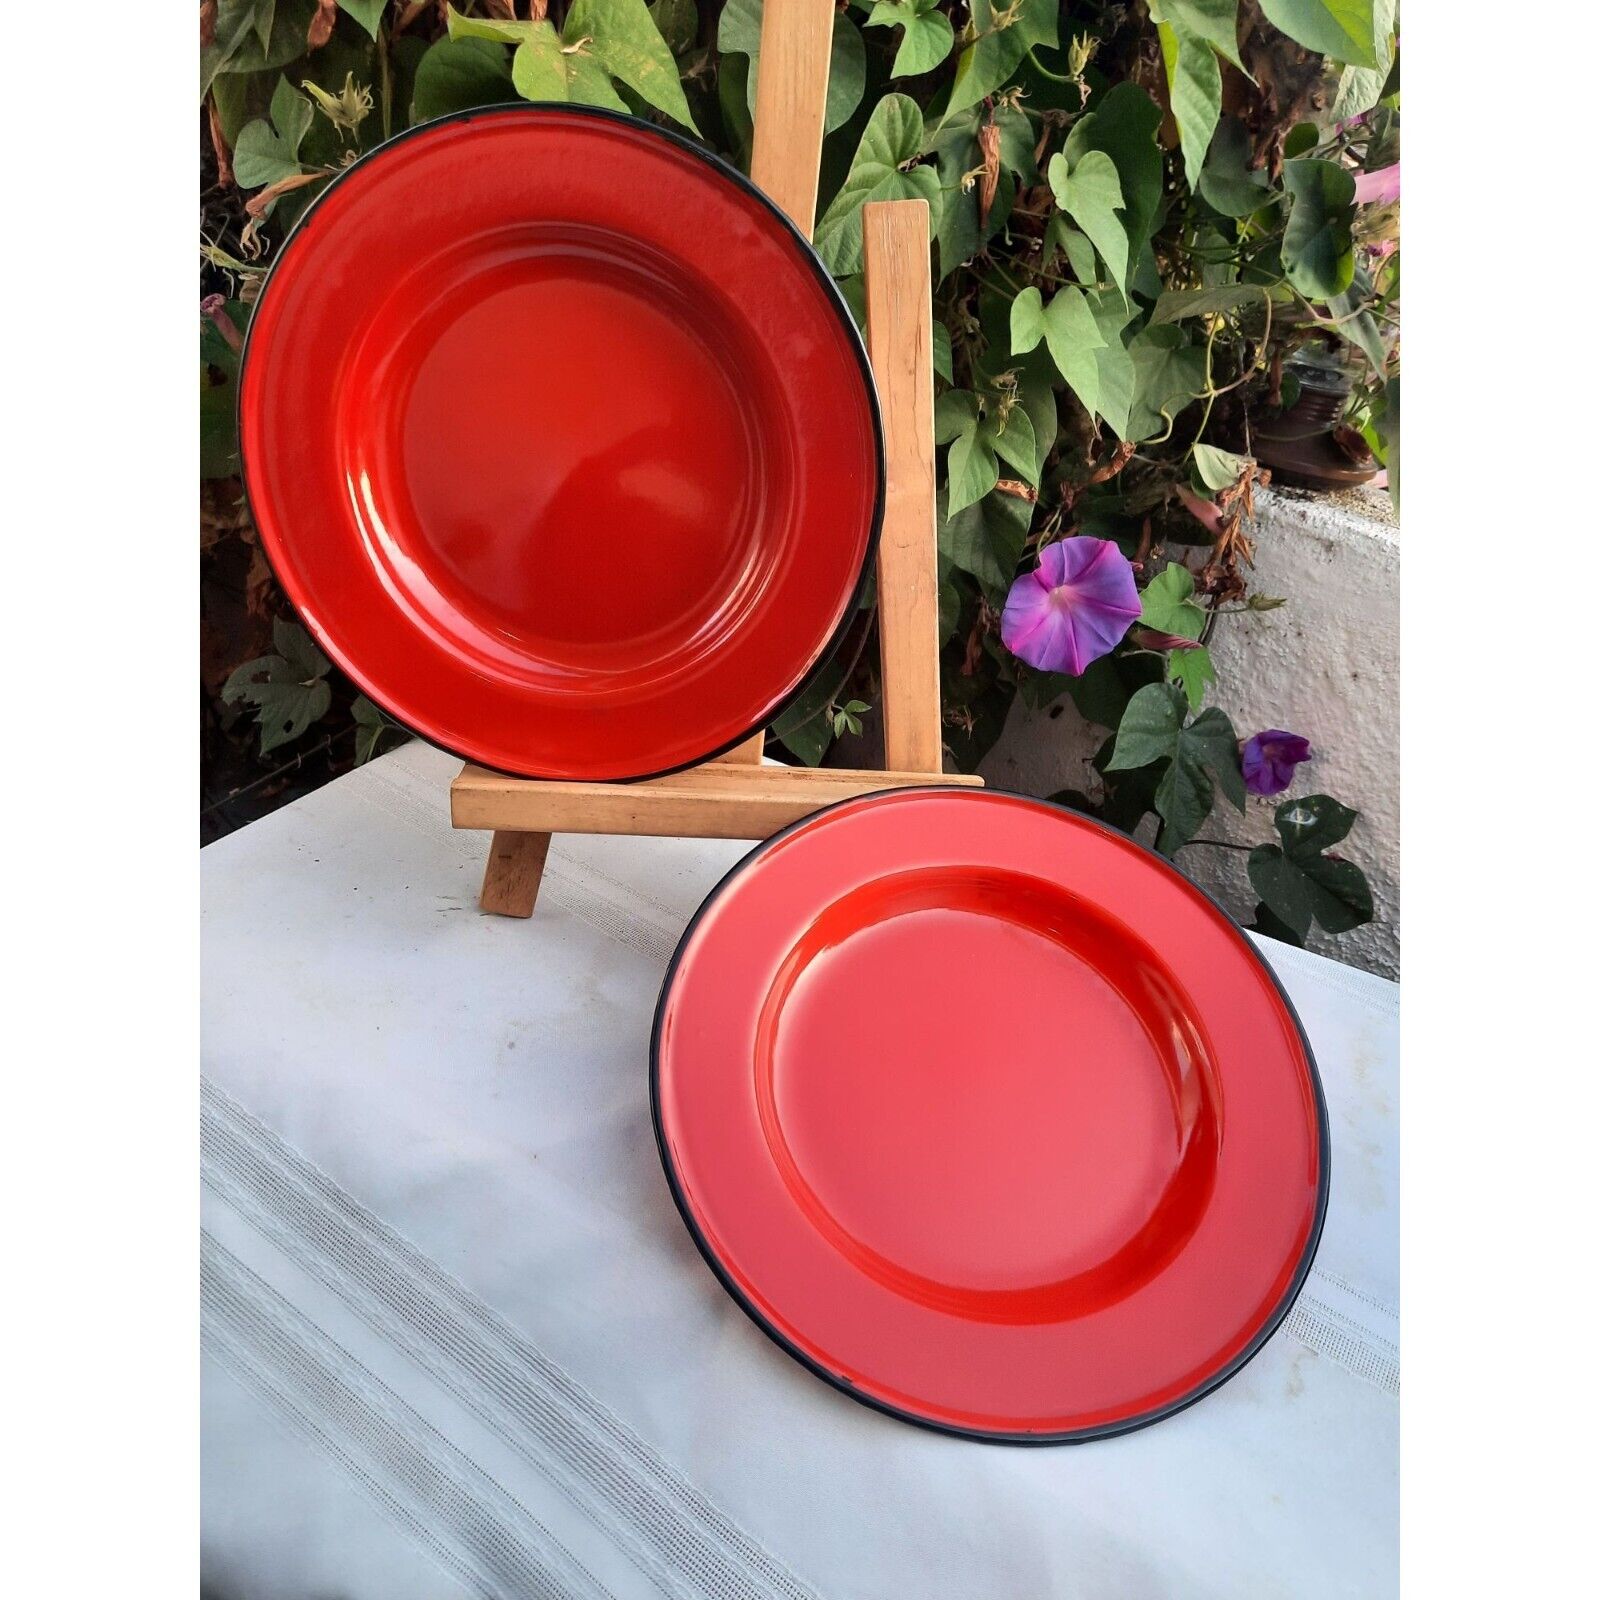 Vintage Hula Silesia Poland Red Enamelware Plates With Black Rim Pair 2 Pc